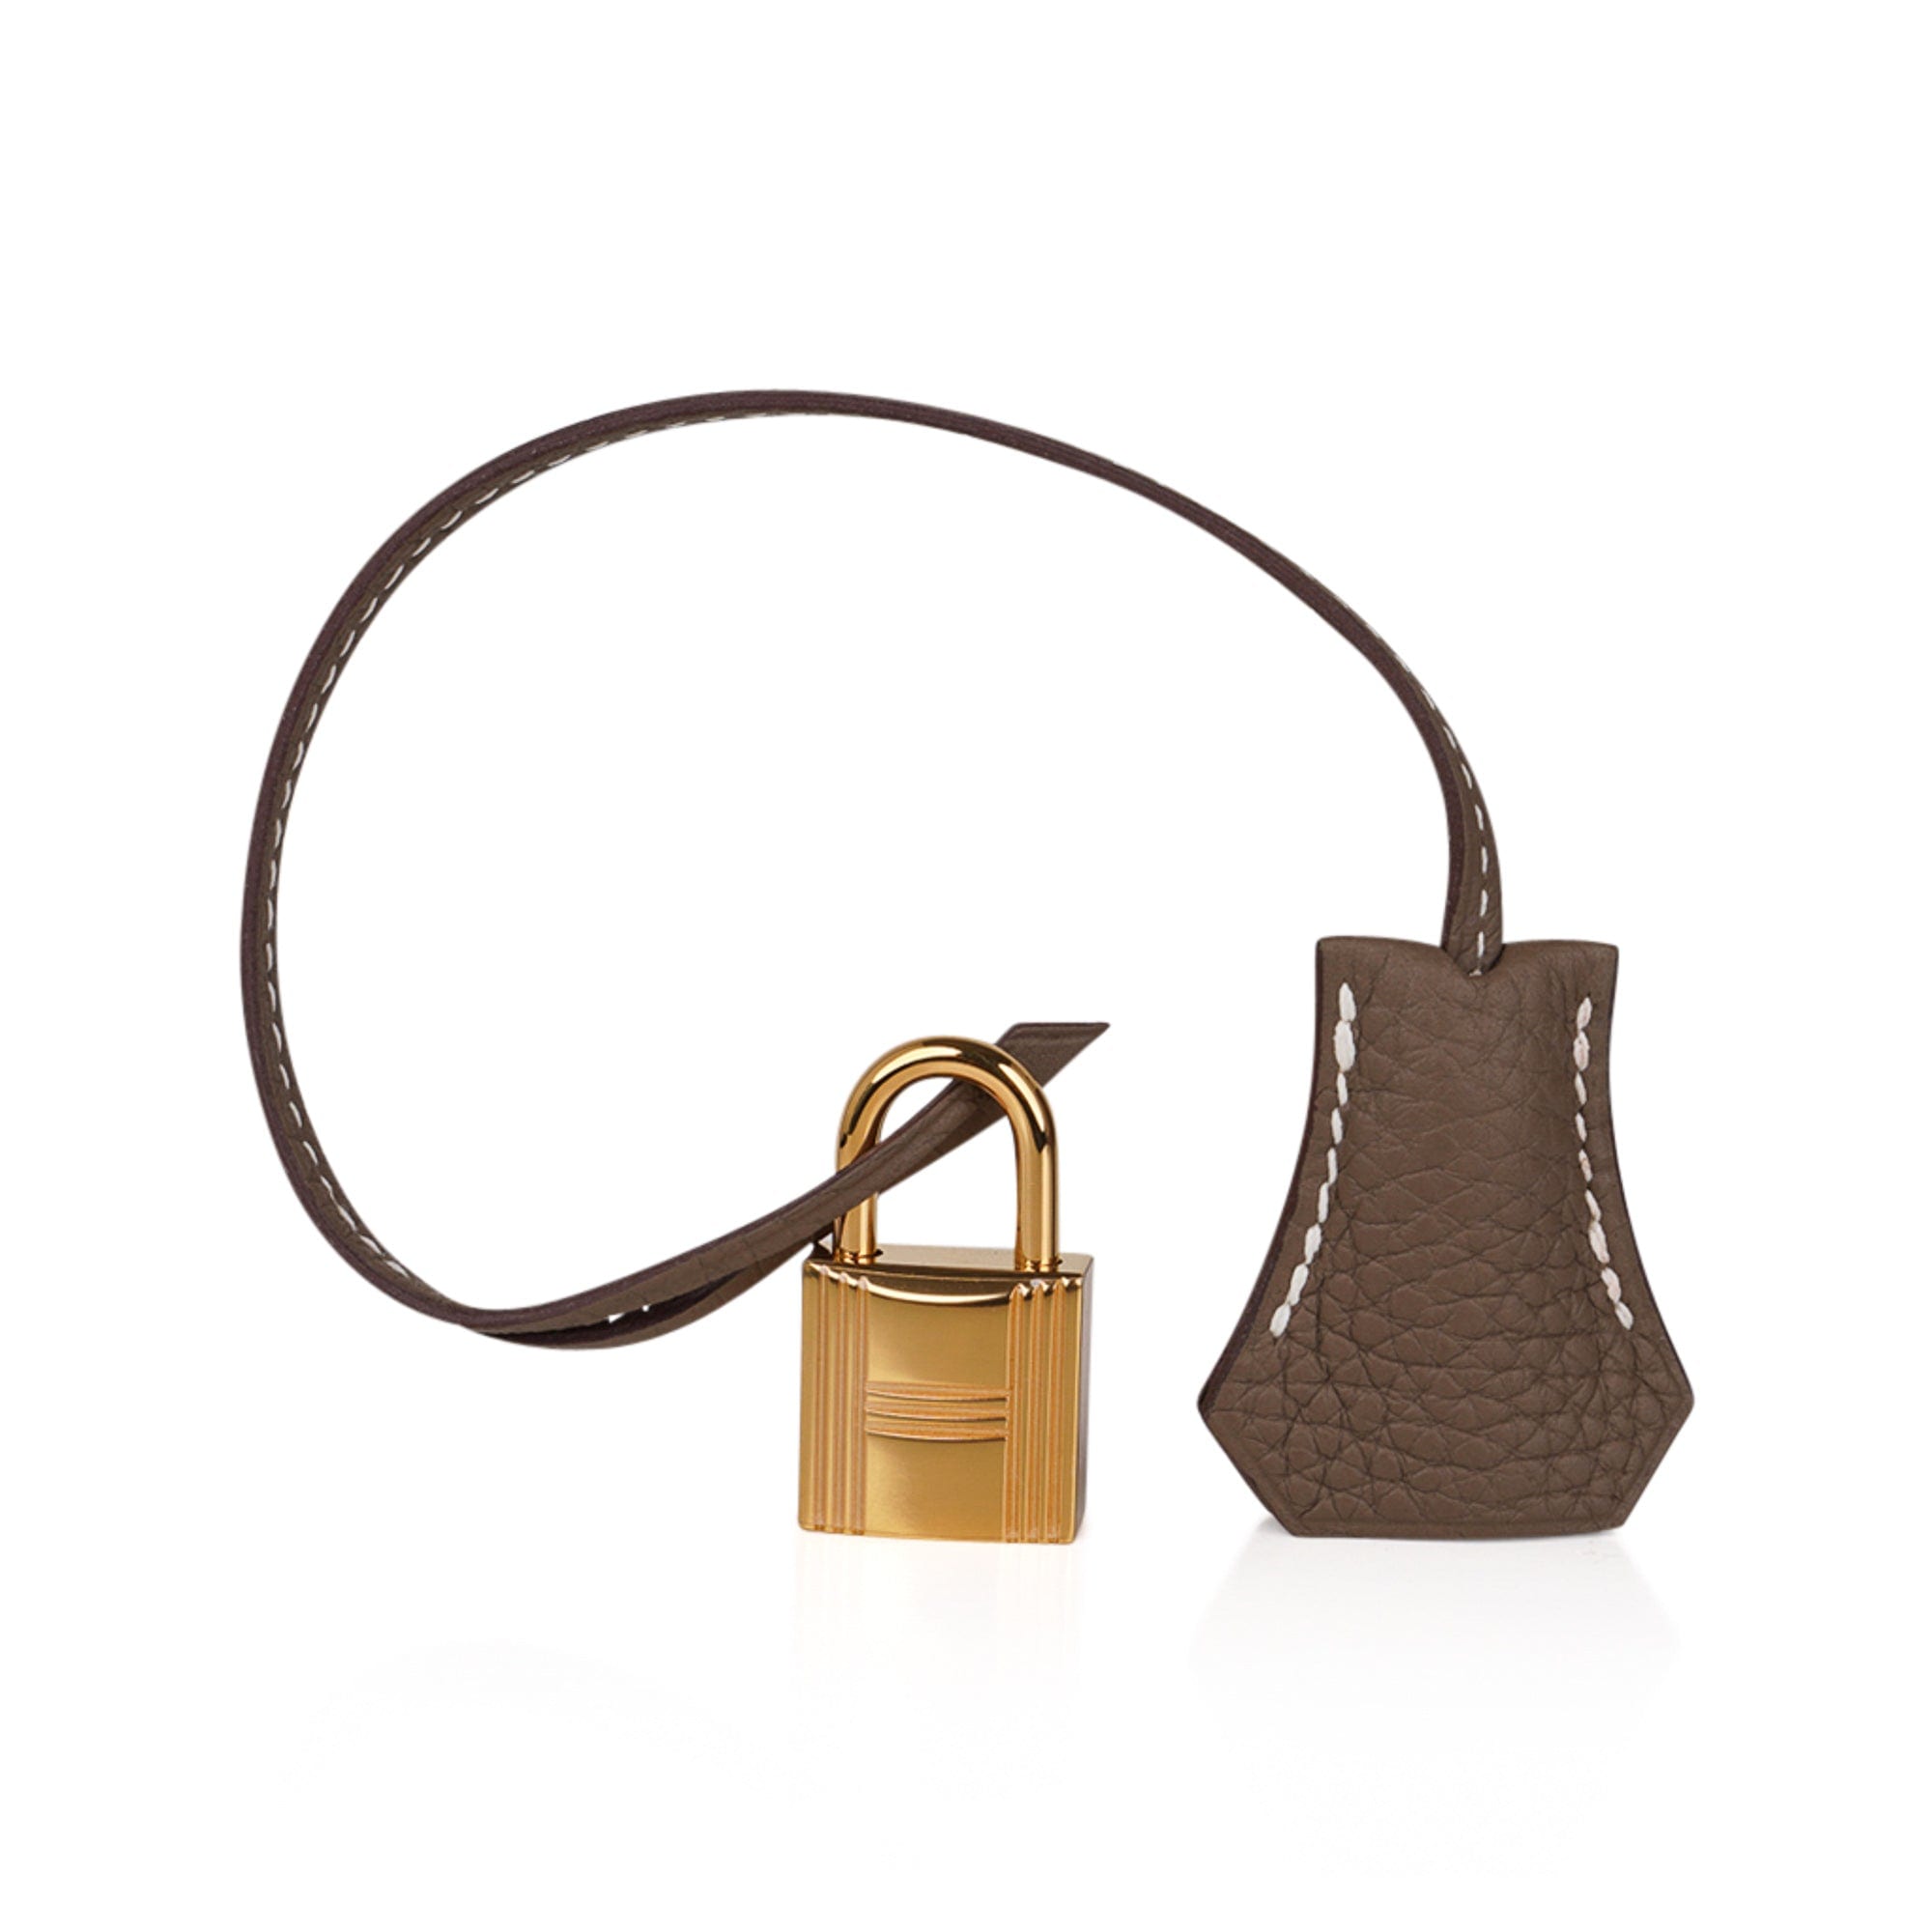 Hermes Birkin 30 Bag Gold Togo Leather Gold Hardware – Mightychic